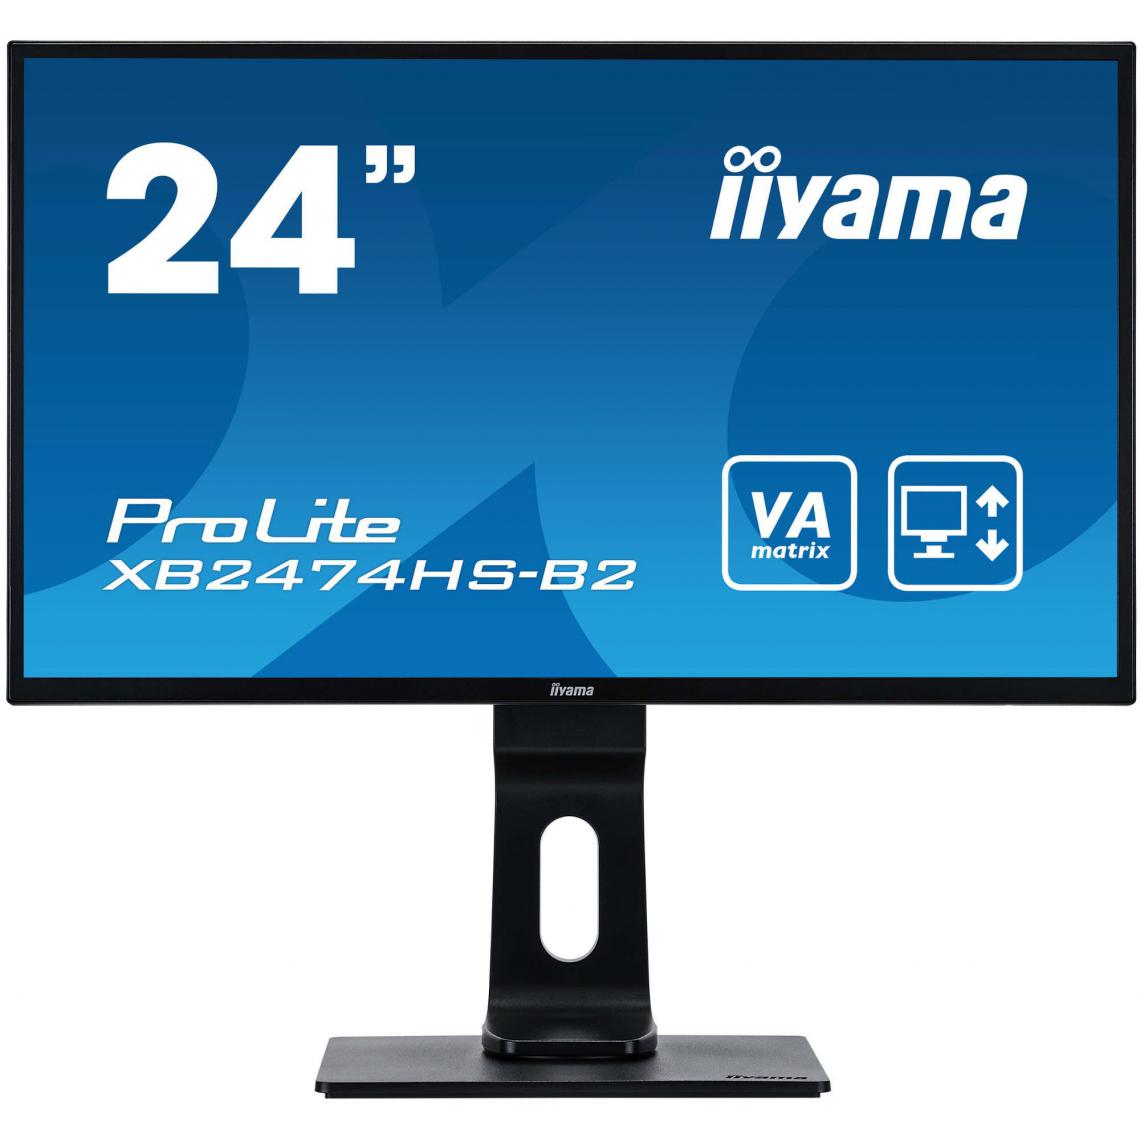 Iiyama - Ecran 24 pouces Full HD Moniteur ProLite IIyama 24" Full HD Pivot - Moniteur PC